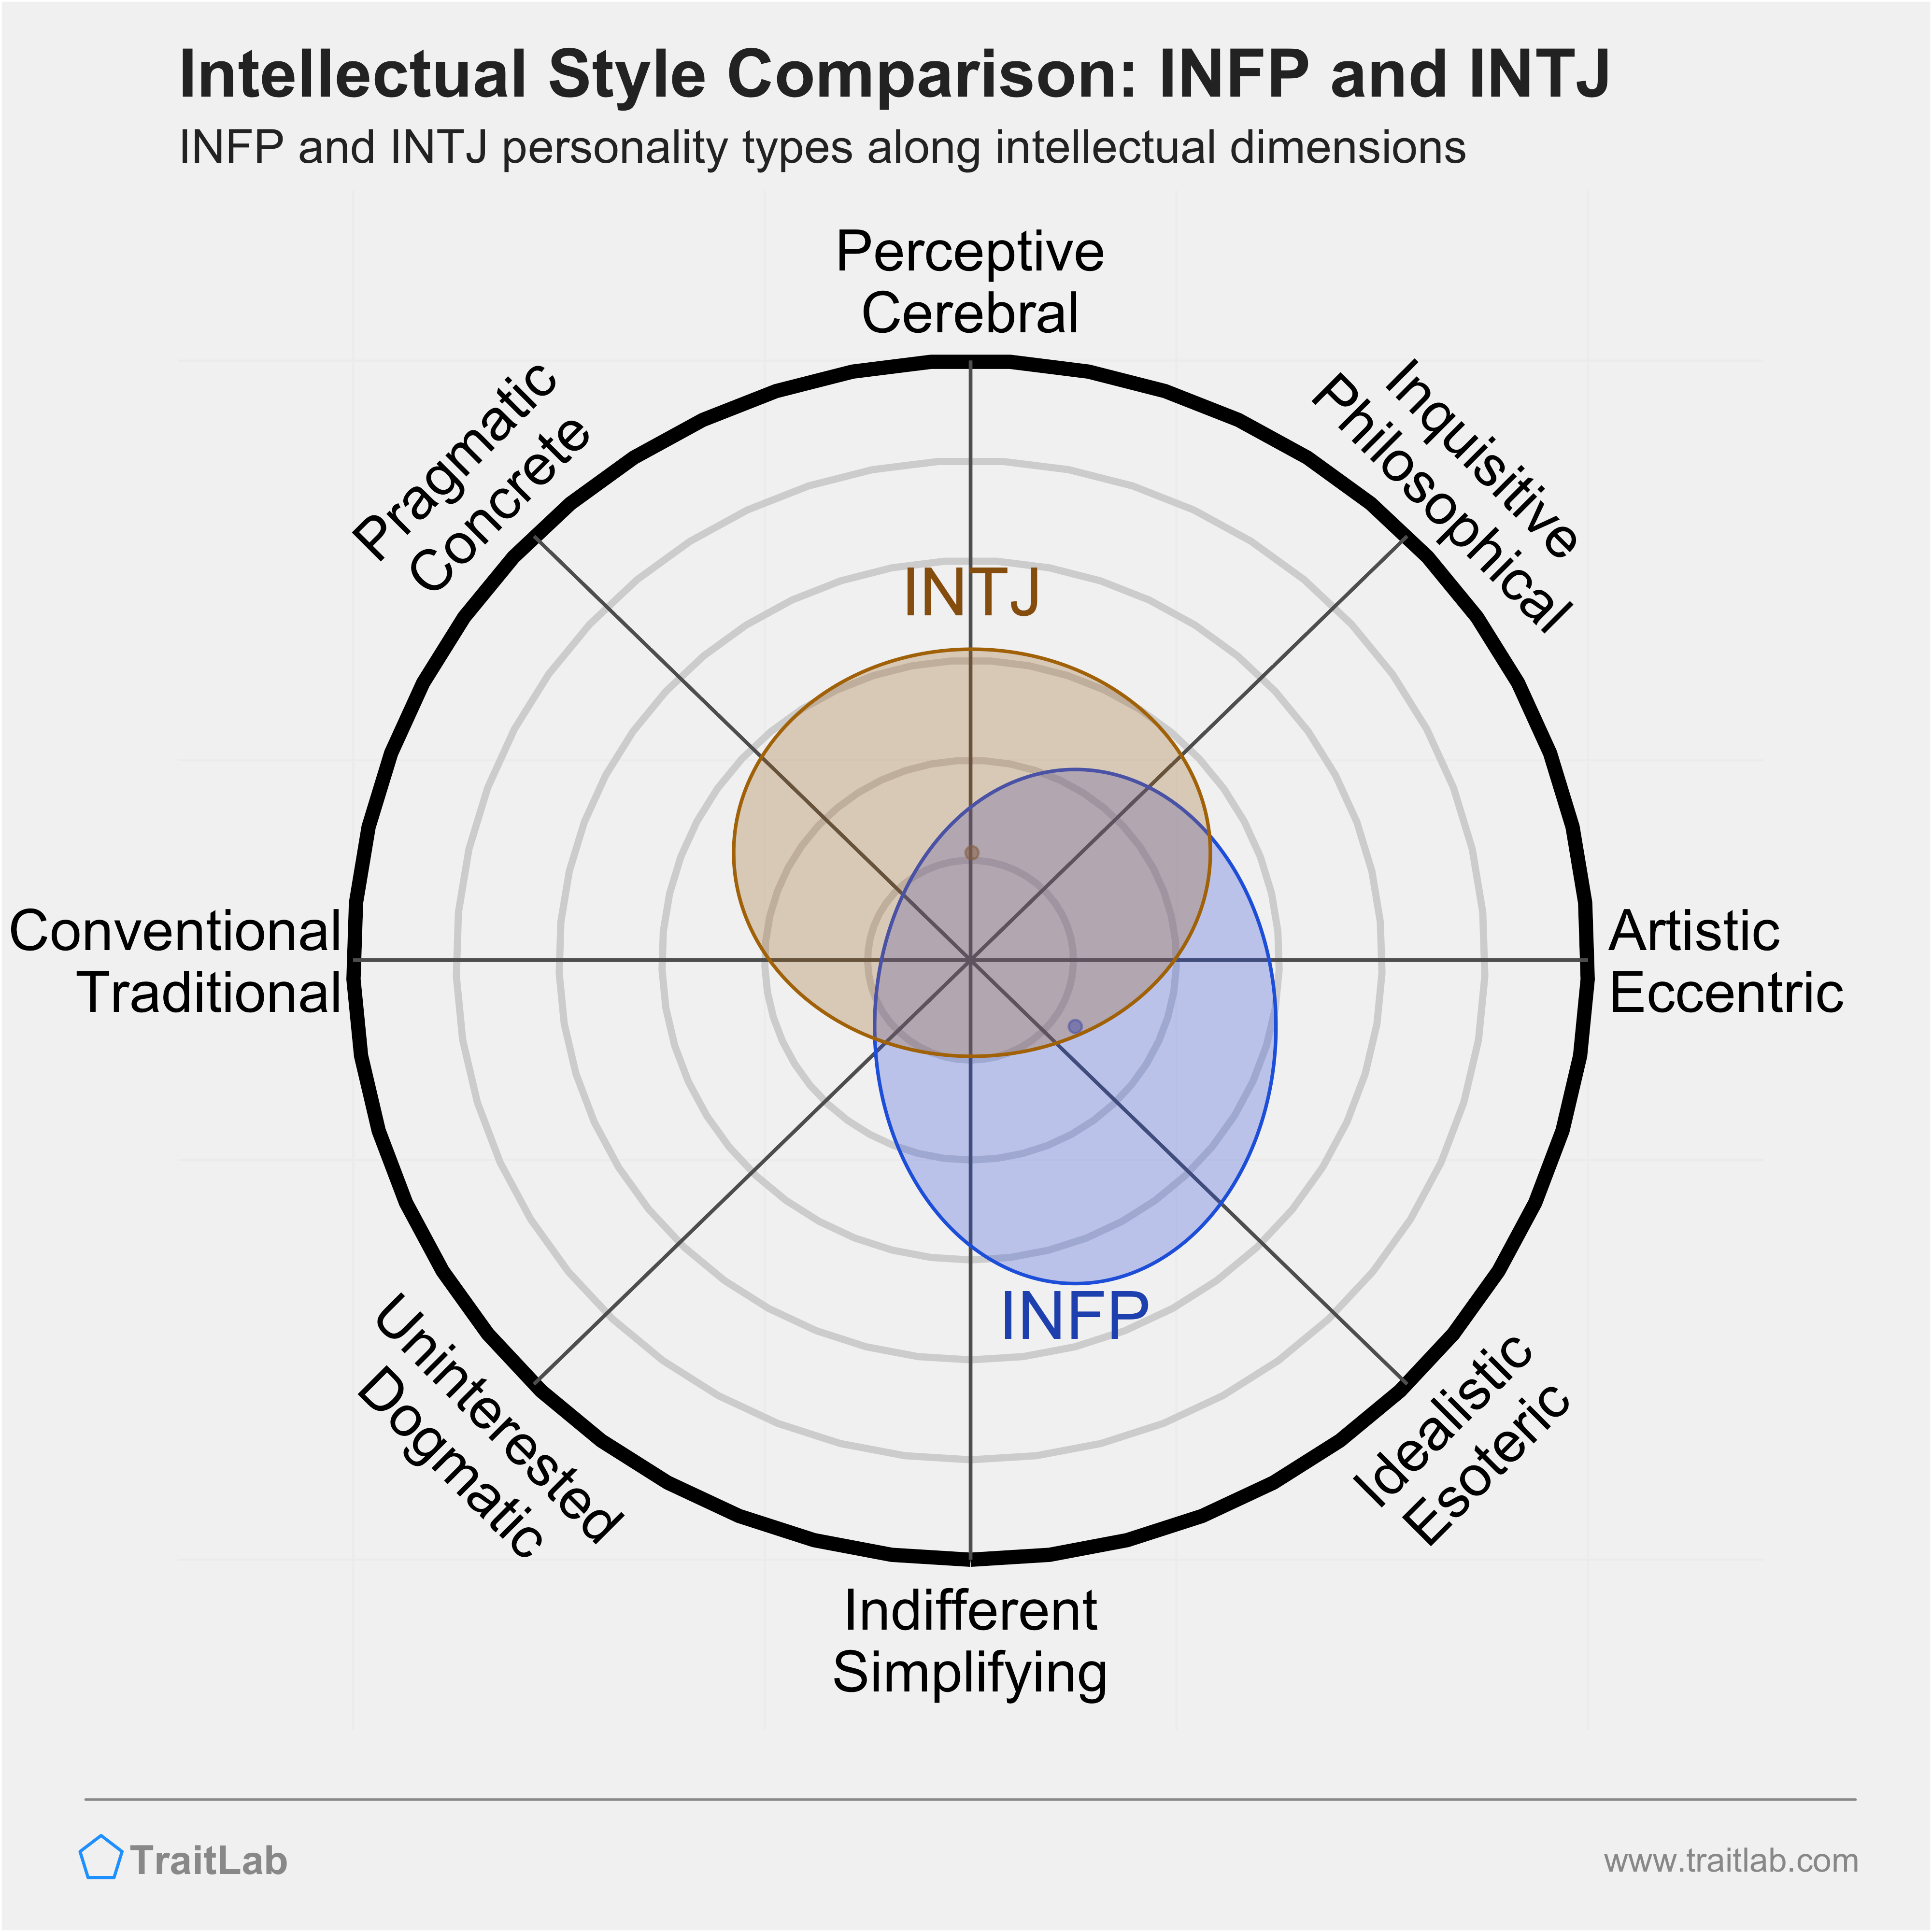 INFP and INTJ comparison across intellectual dimensions